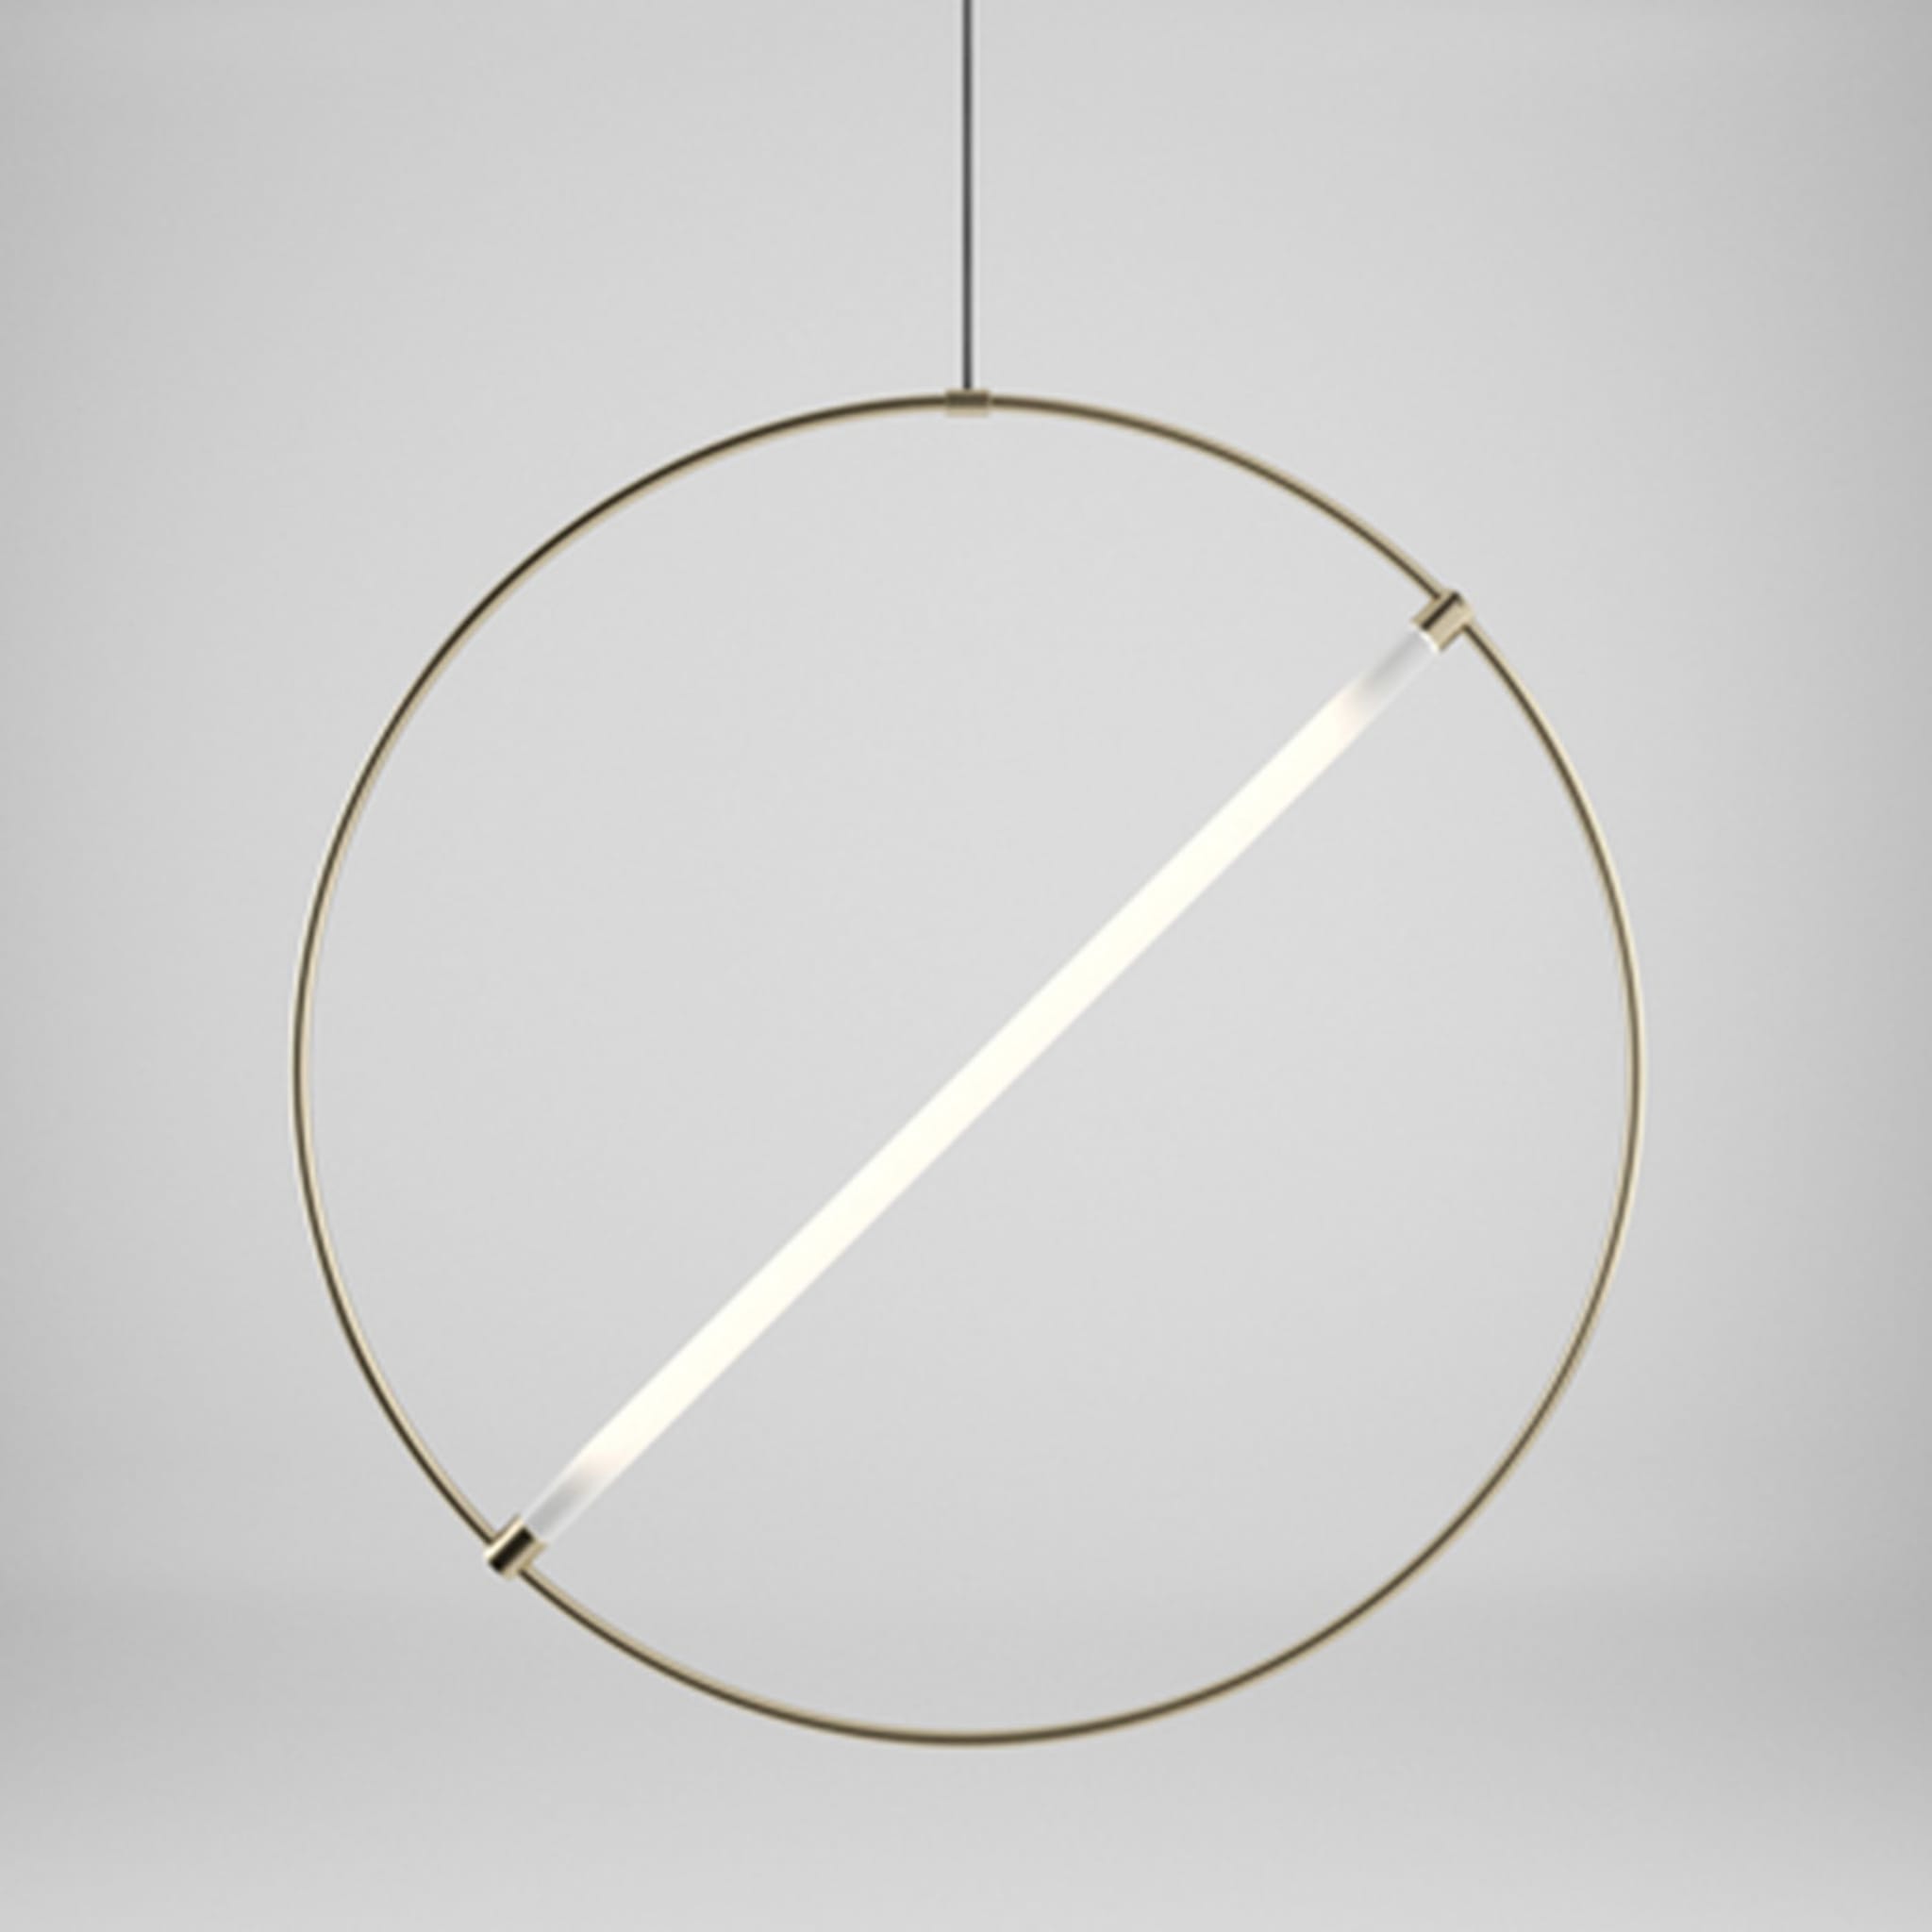 Ed046 Circular Pendant Lamp - Alternative view 2